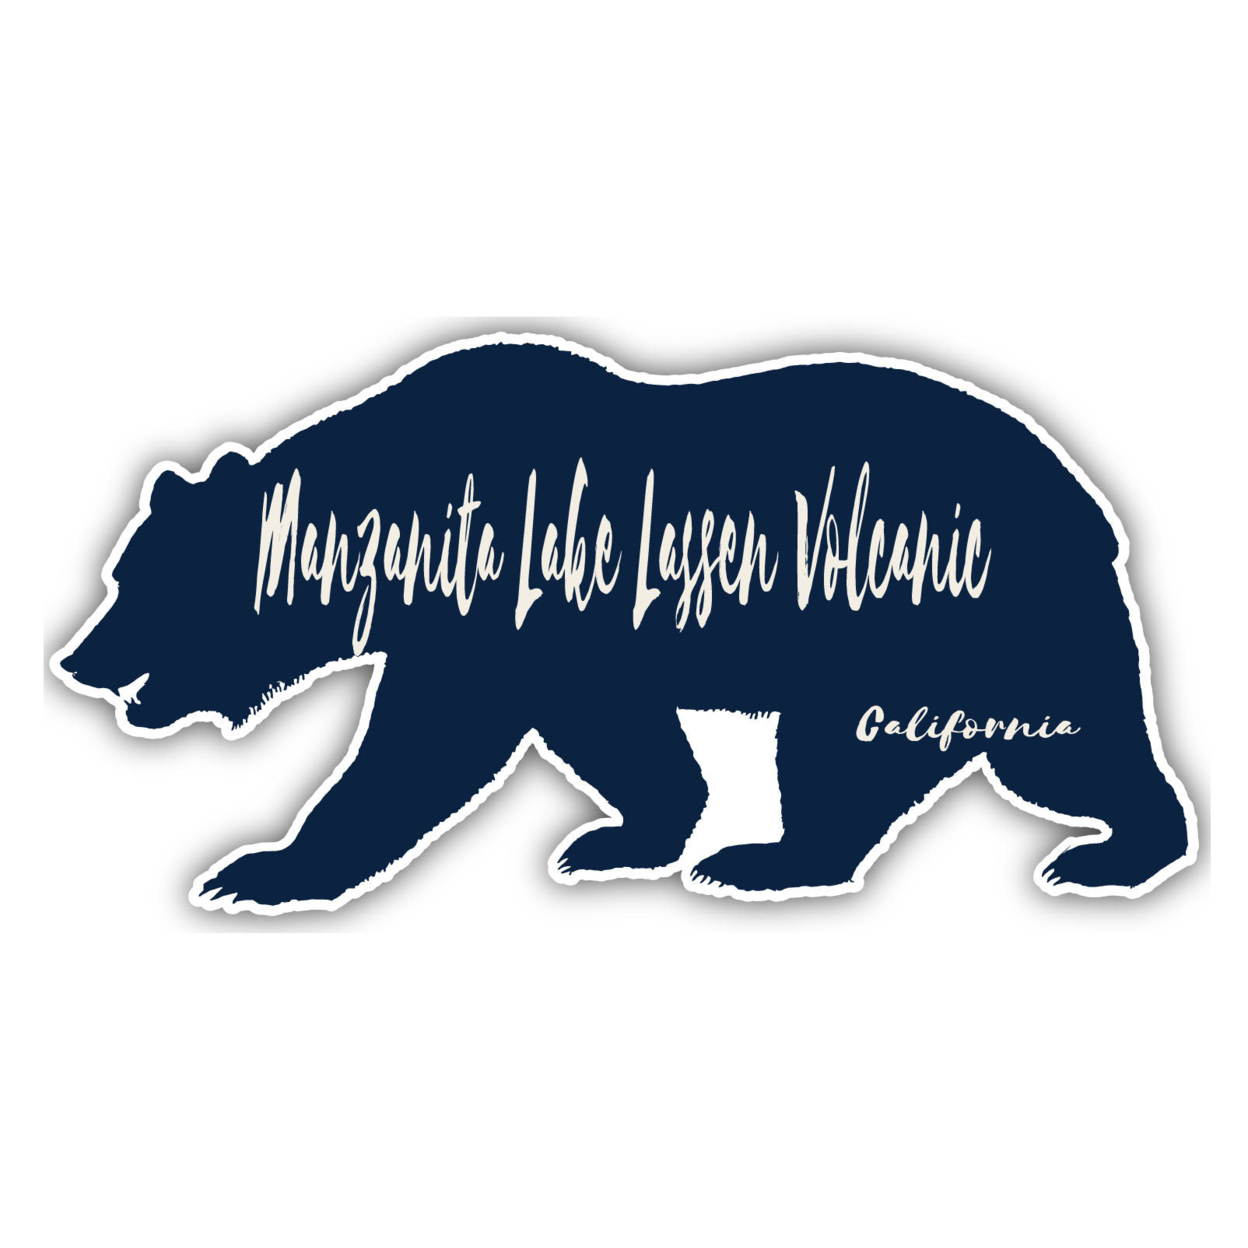 Manzanita Lake Lassen Volcanic California Souvenir Decorative Stickers (Choose Theme And Size) - 2-Inch, Bear